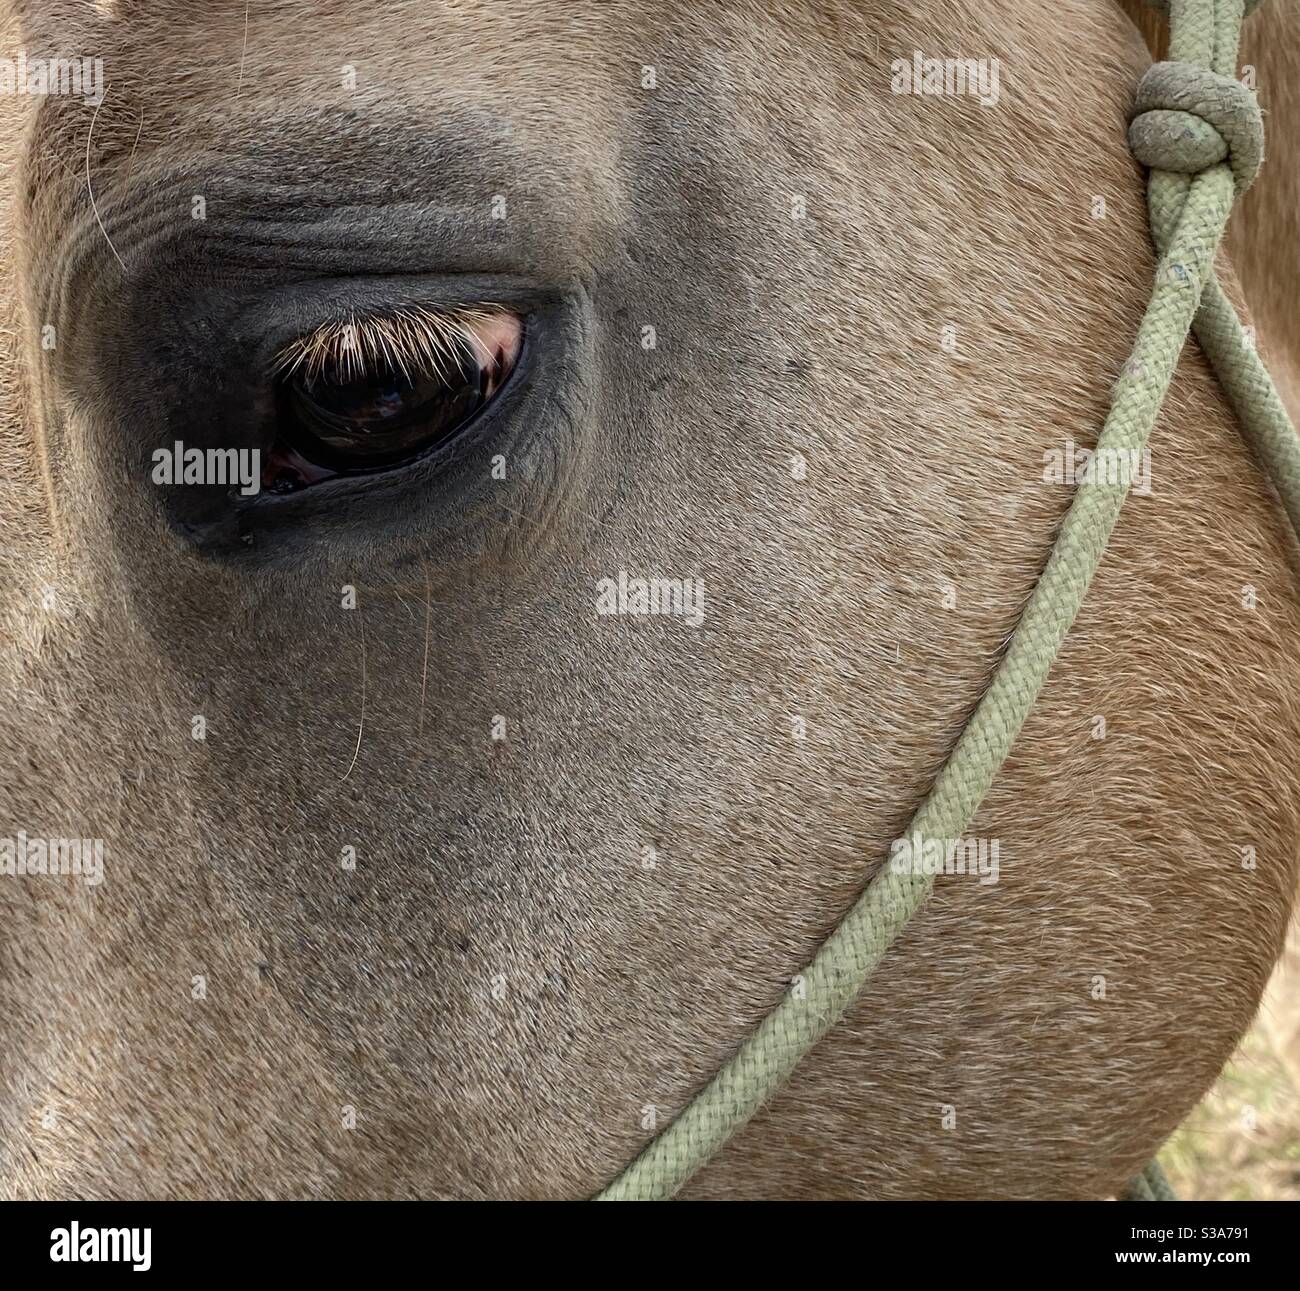 Closeup details of a horses eye Stock Photo